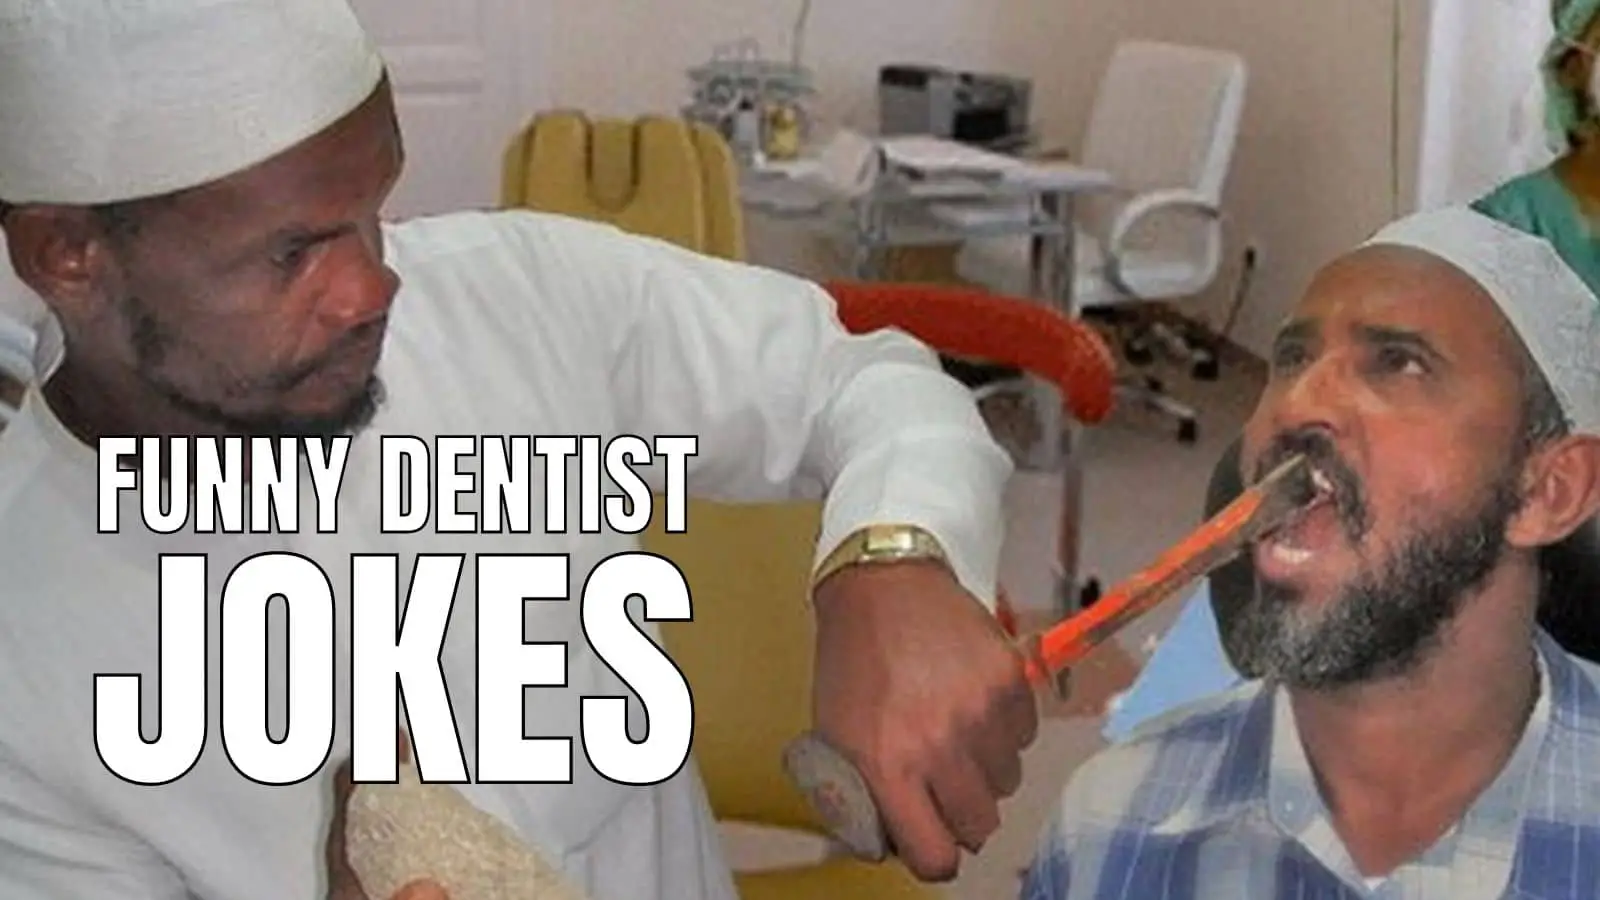 70 Funny Dentist Jokes To Get Your Fill Of Dental Humor Trending News